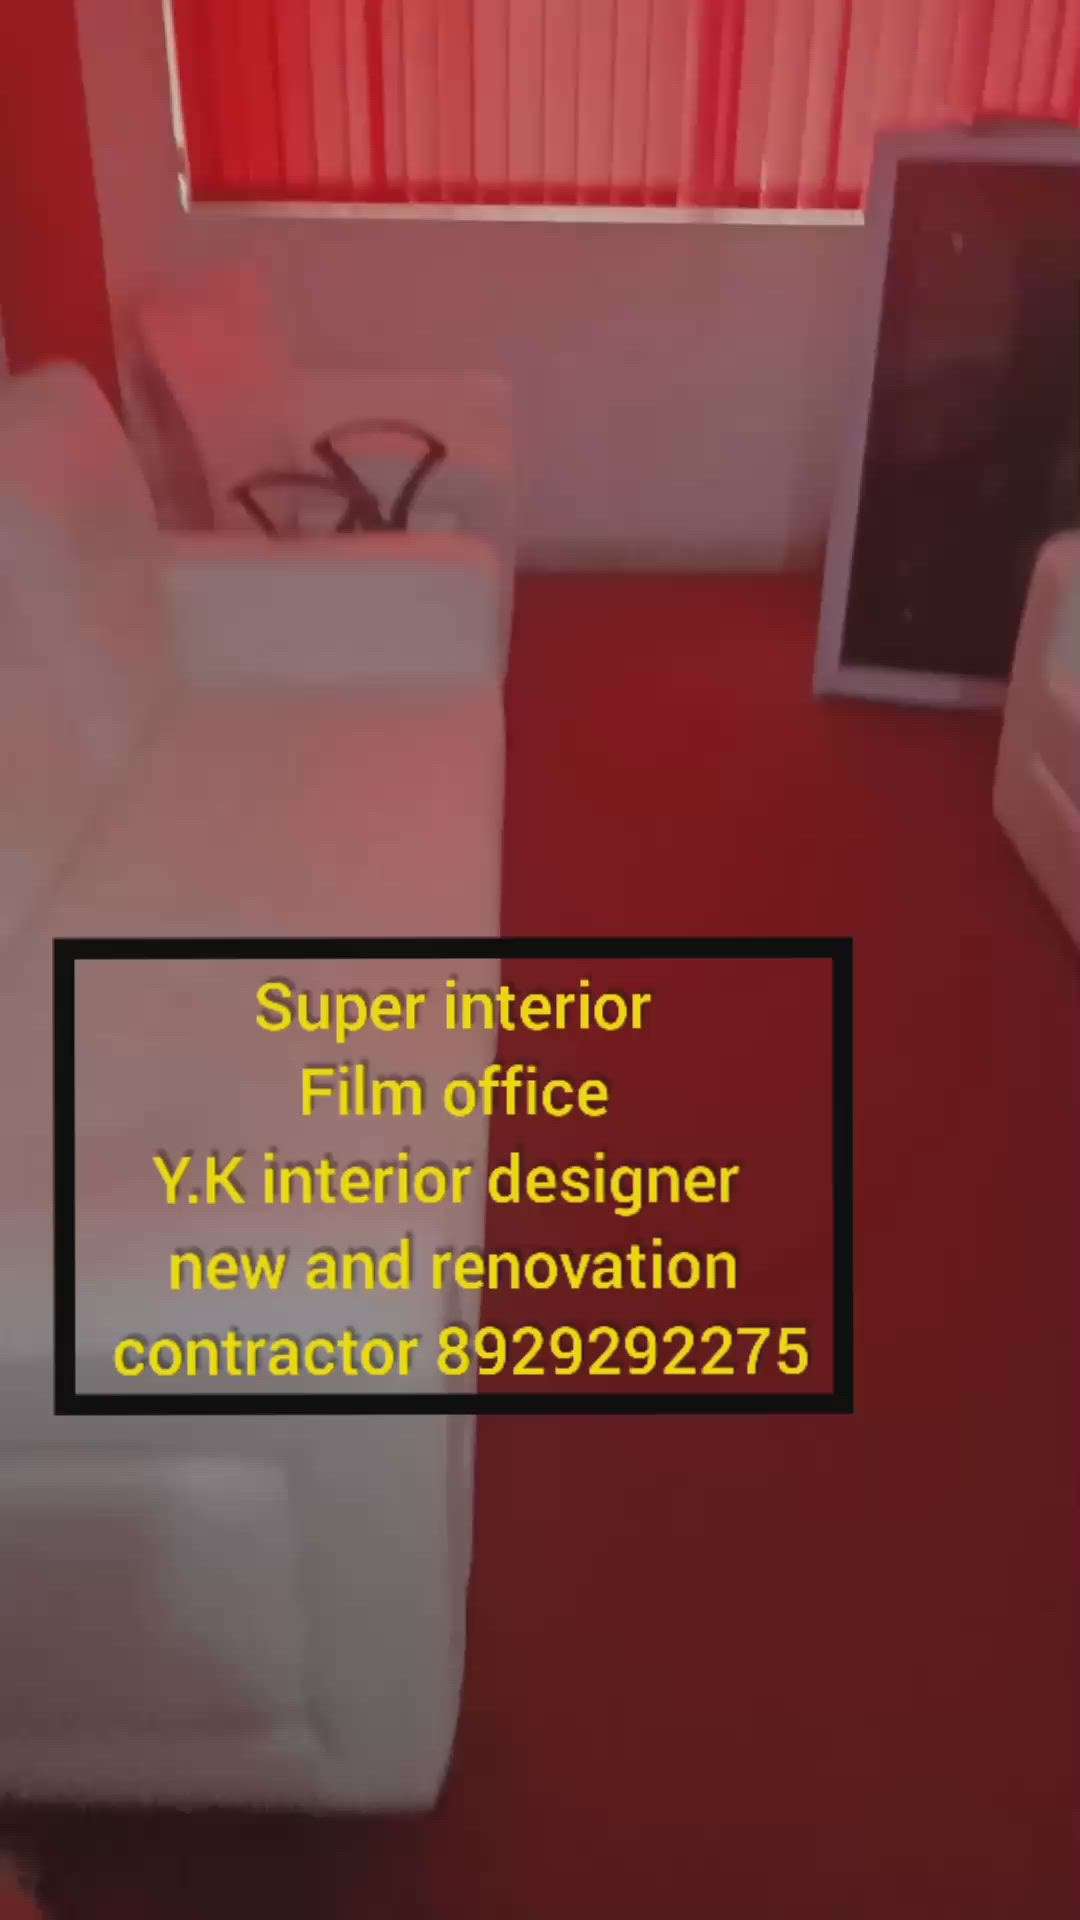 Film studio super interior work Y.K interior designer new and renovation contractor  #ykbestintetior  #mumbai  #mumbaistudio  #ykrenovation  #yklove  #yksuperinterior  #ykzoom